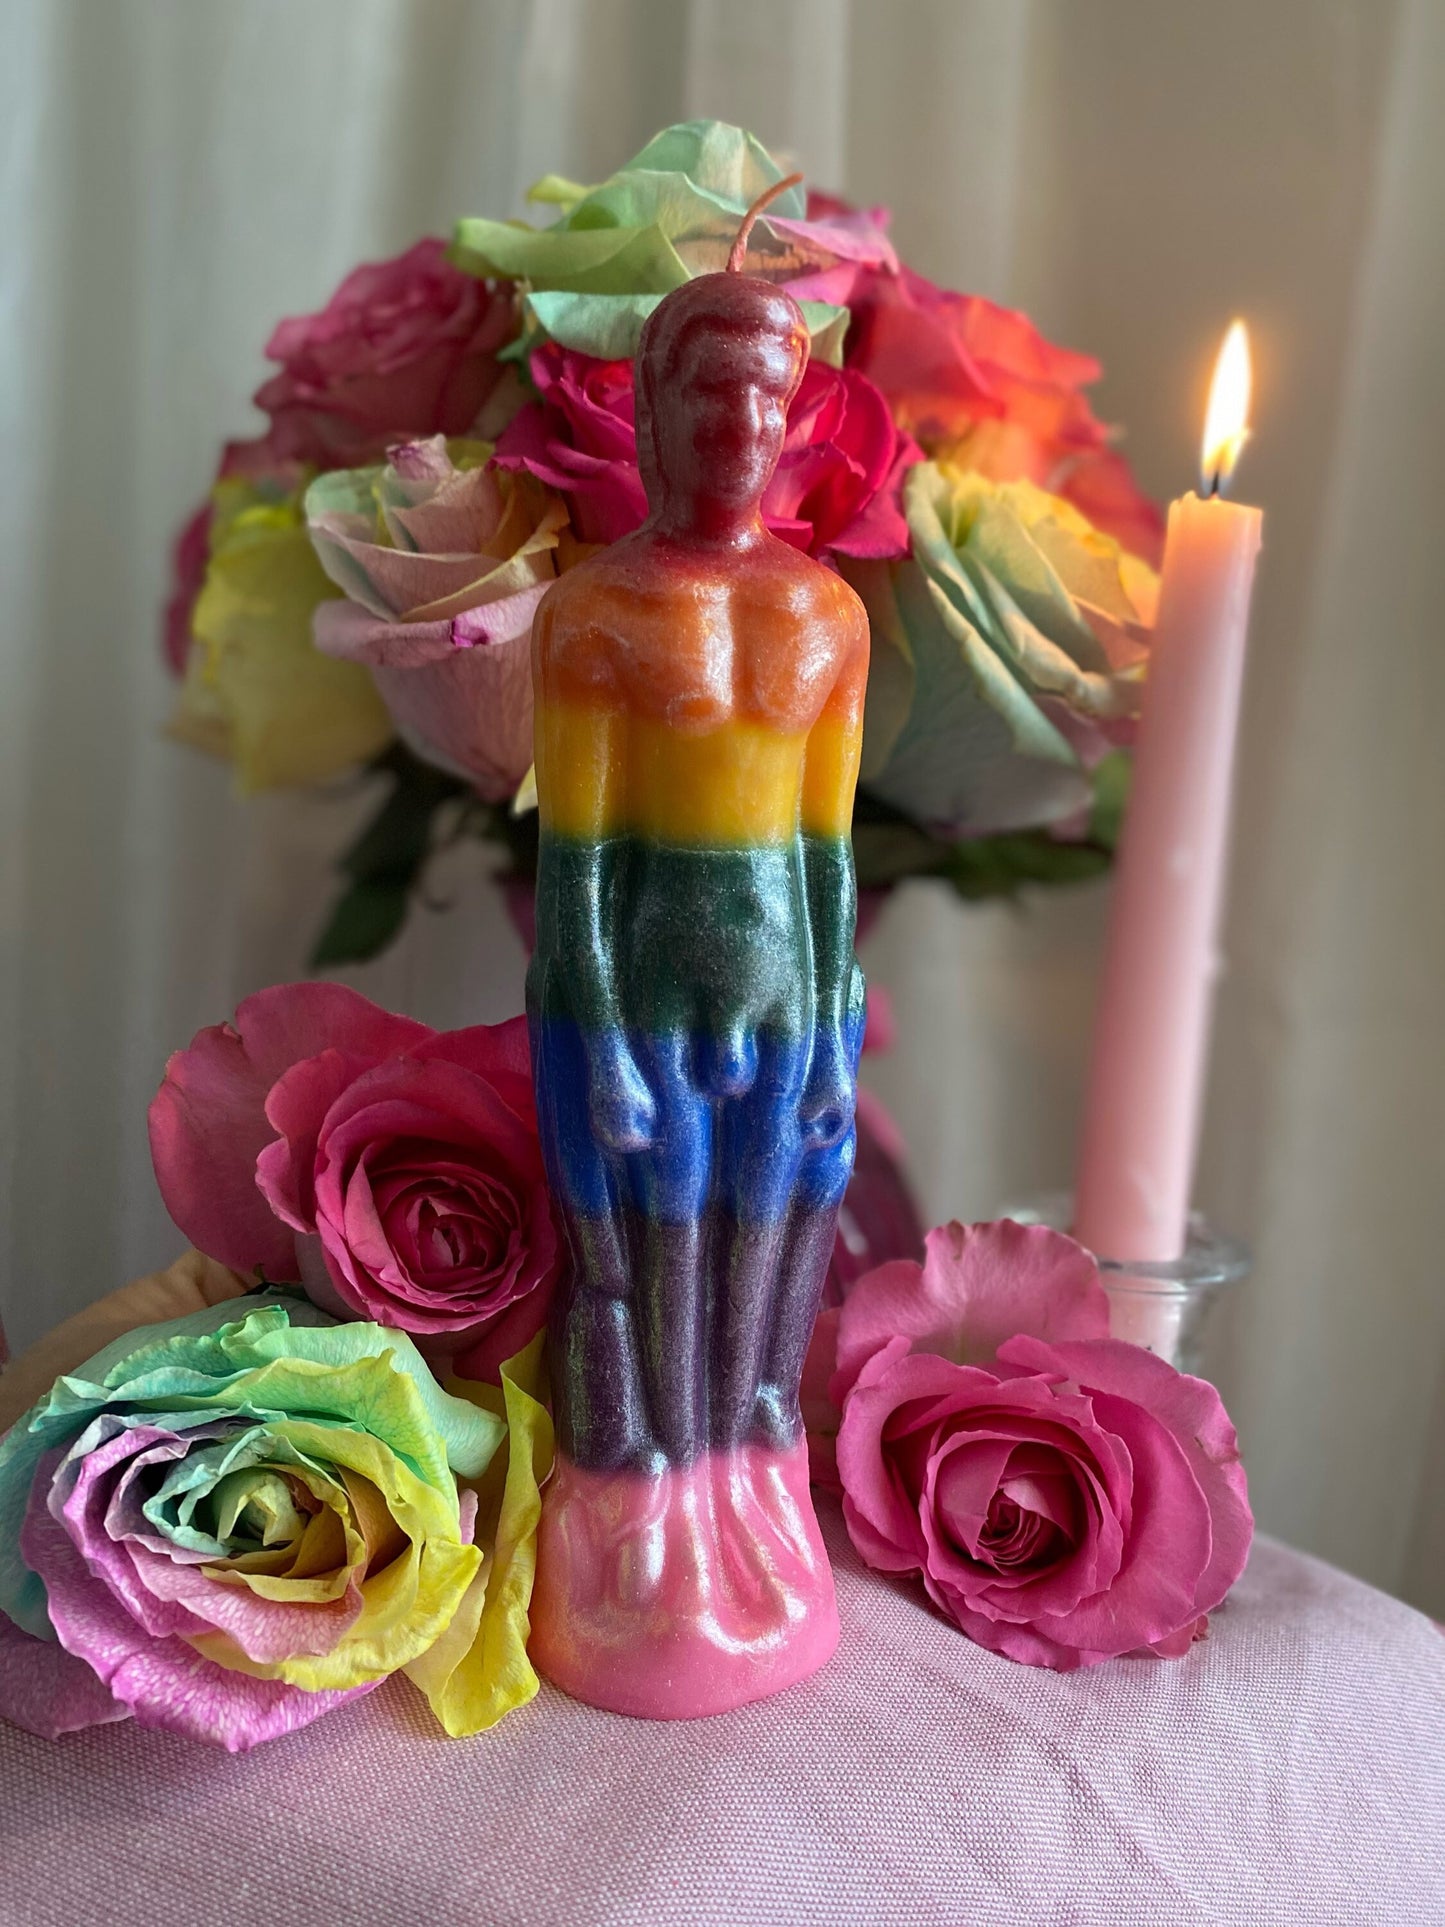 Pride Rainbow Figure Candles